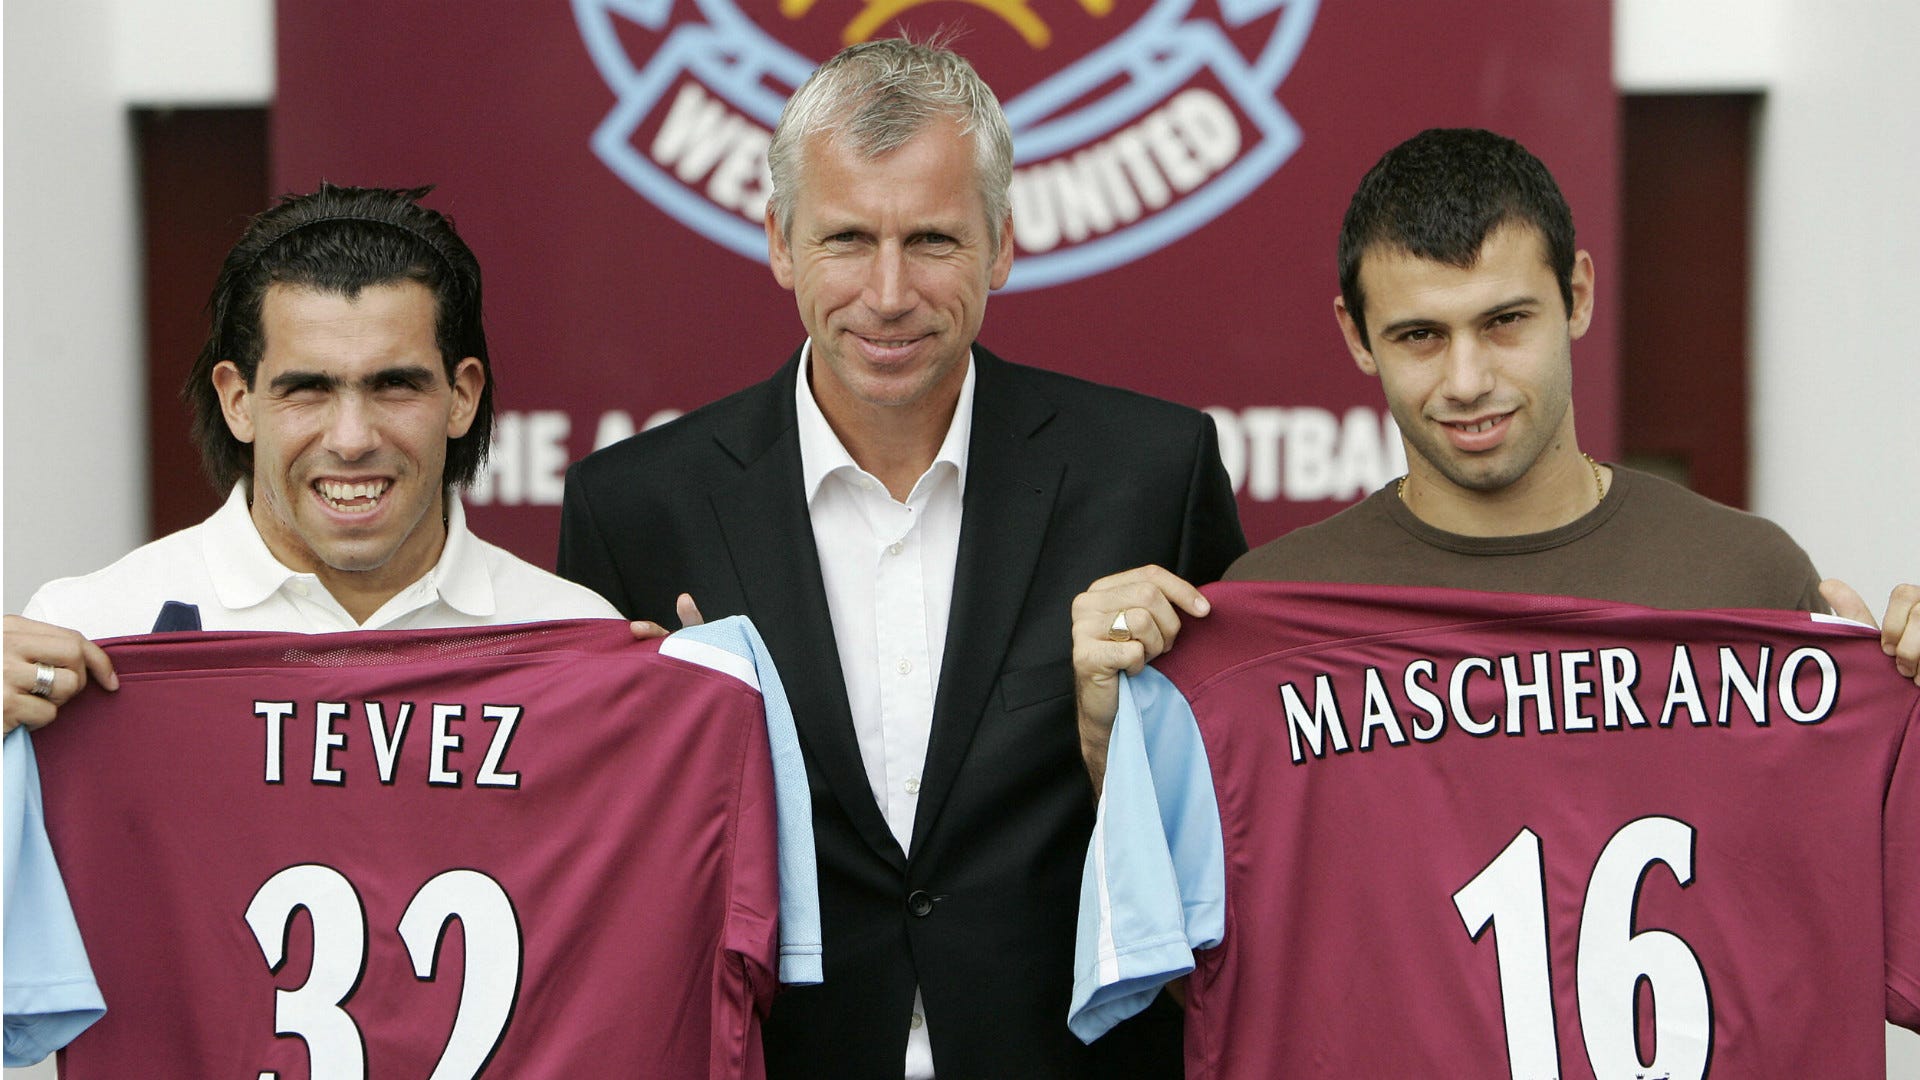 Tevez Mascherano presented West Ham